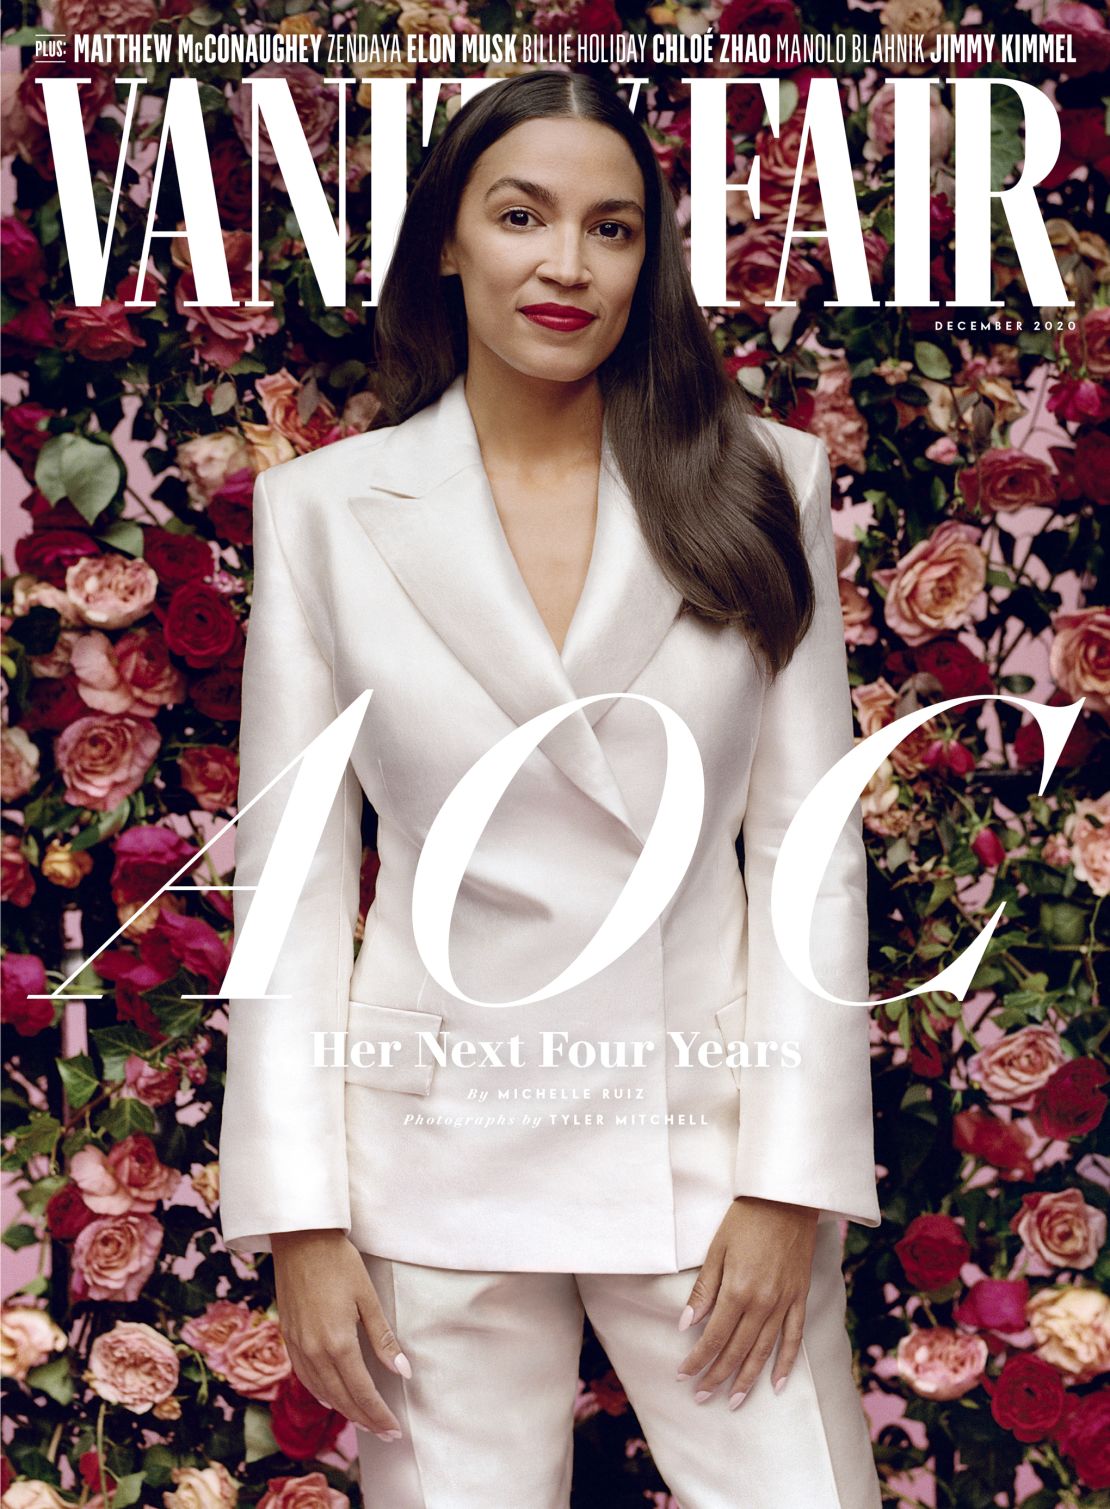 The December issue of Vanity Fair magazine.